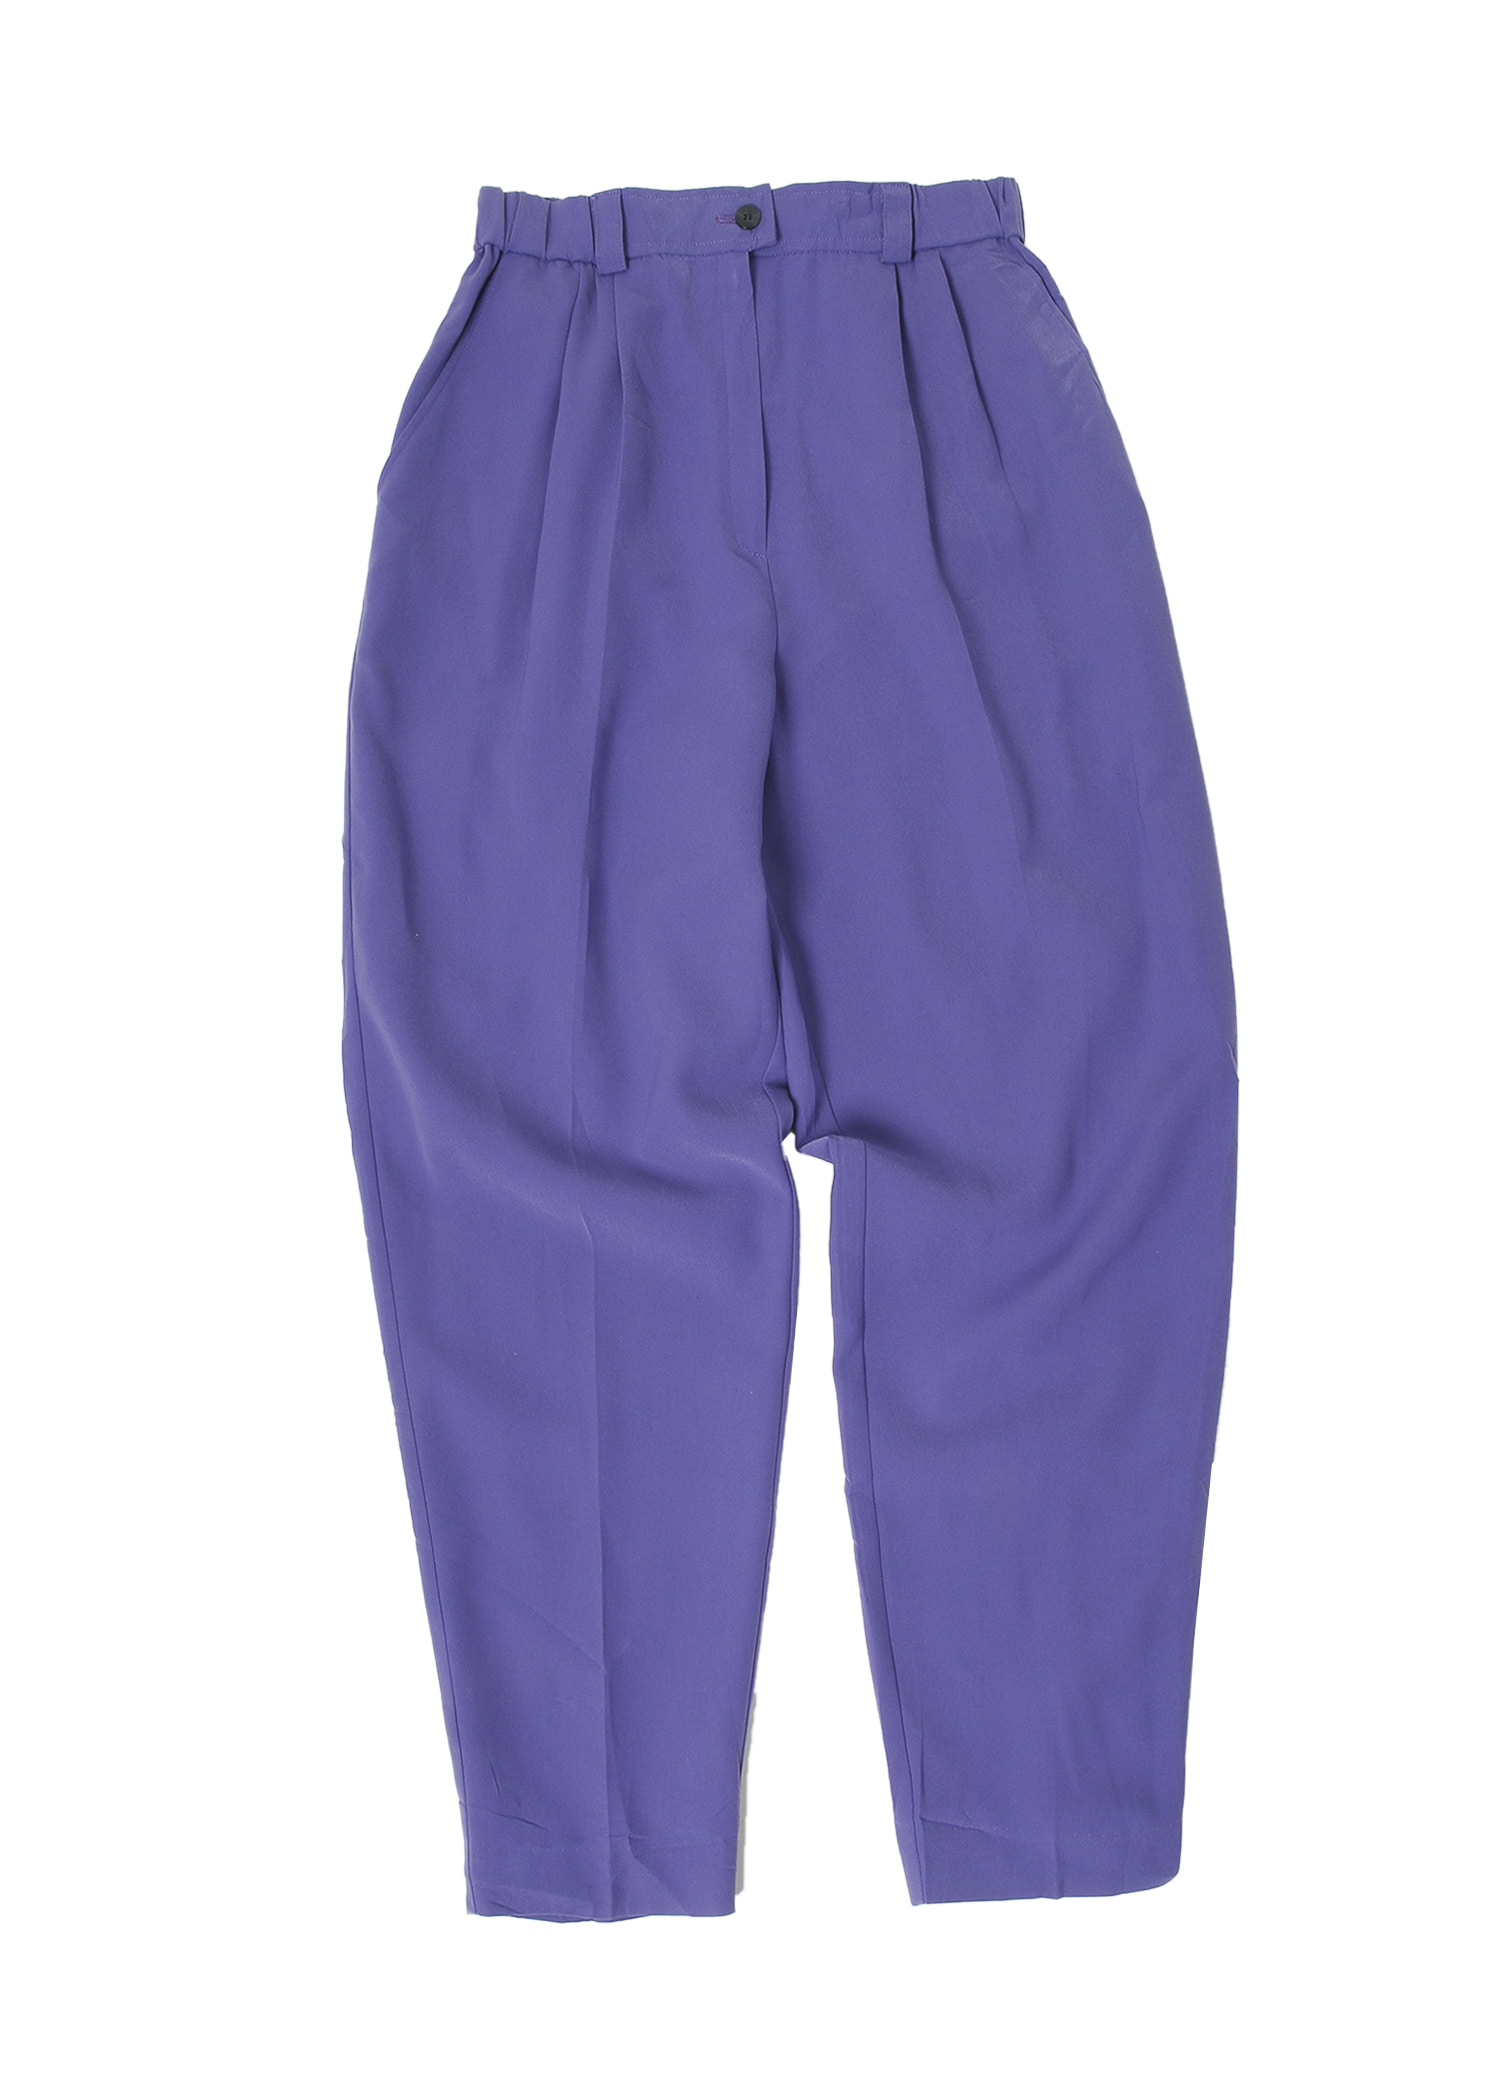 GIVY purple slacks